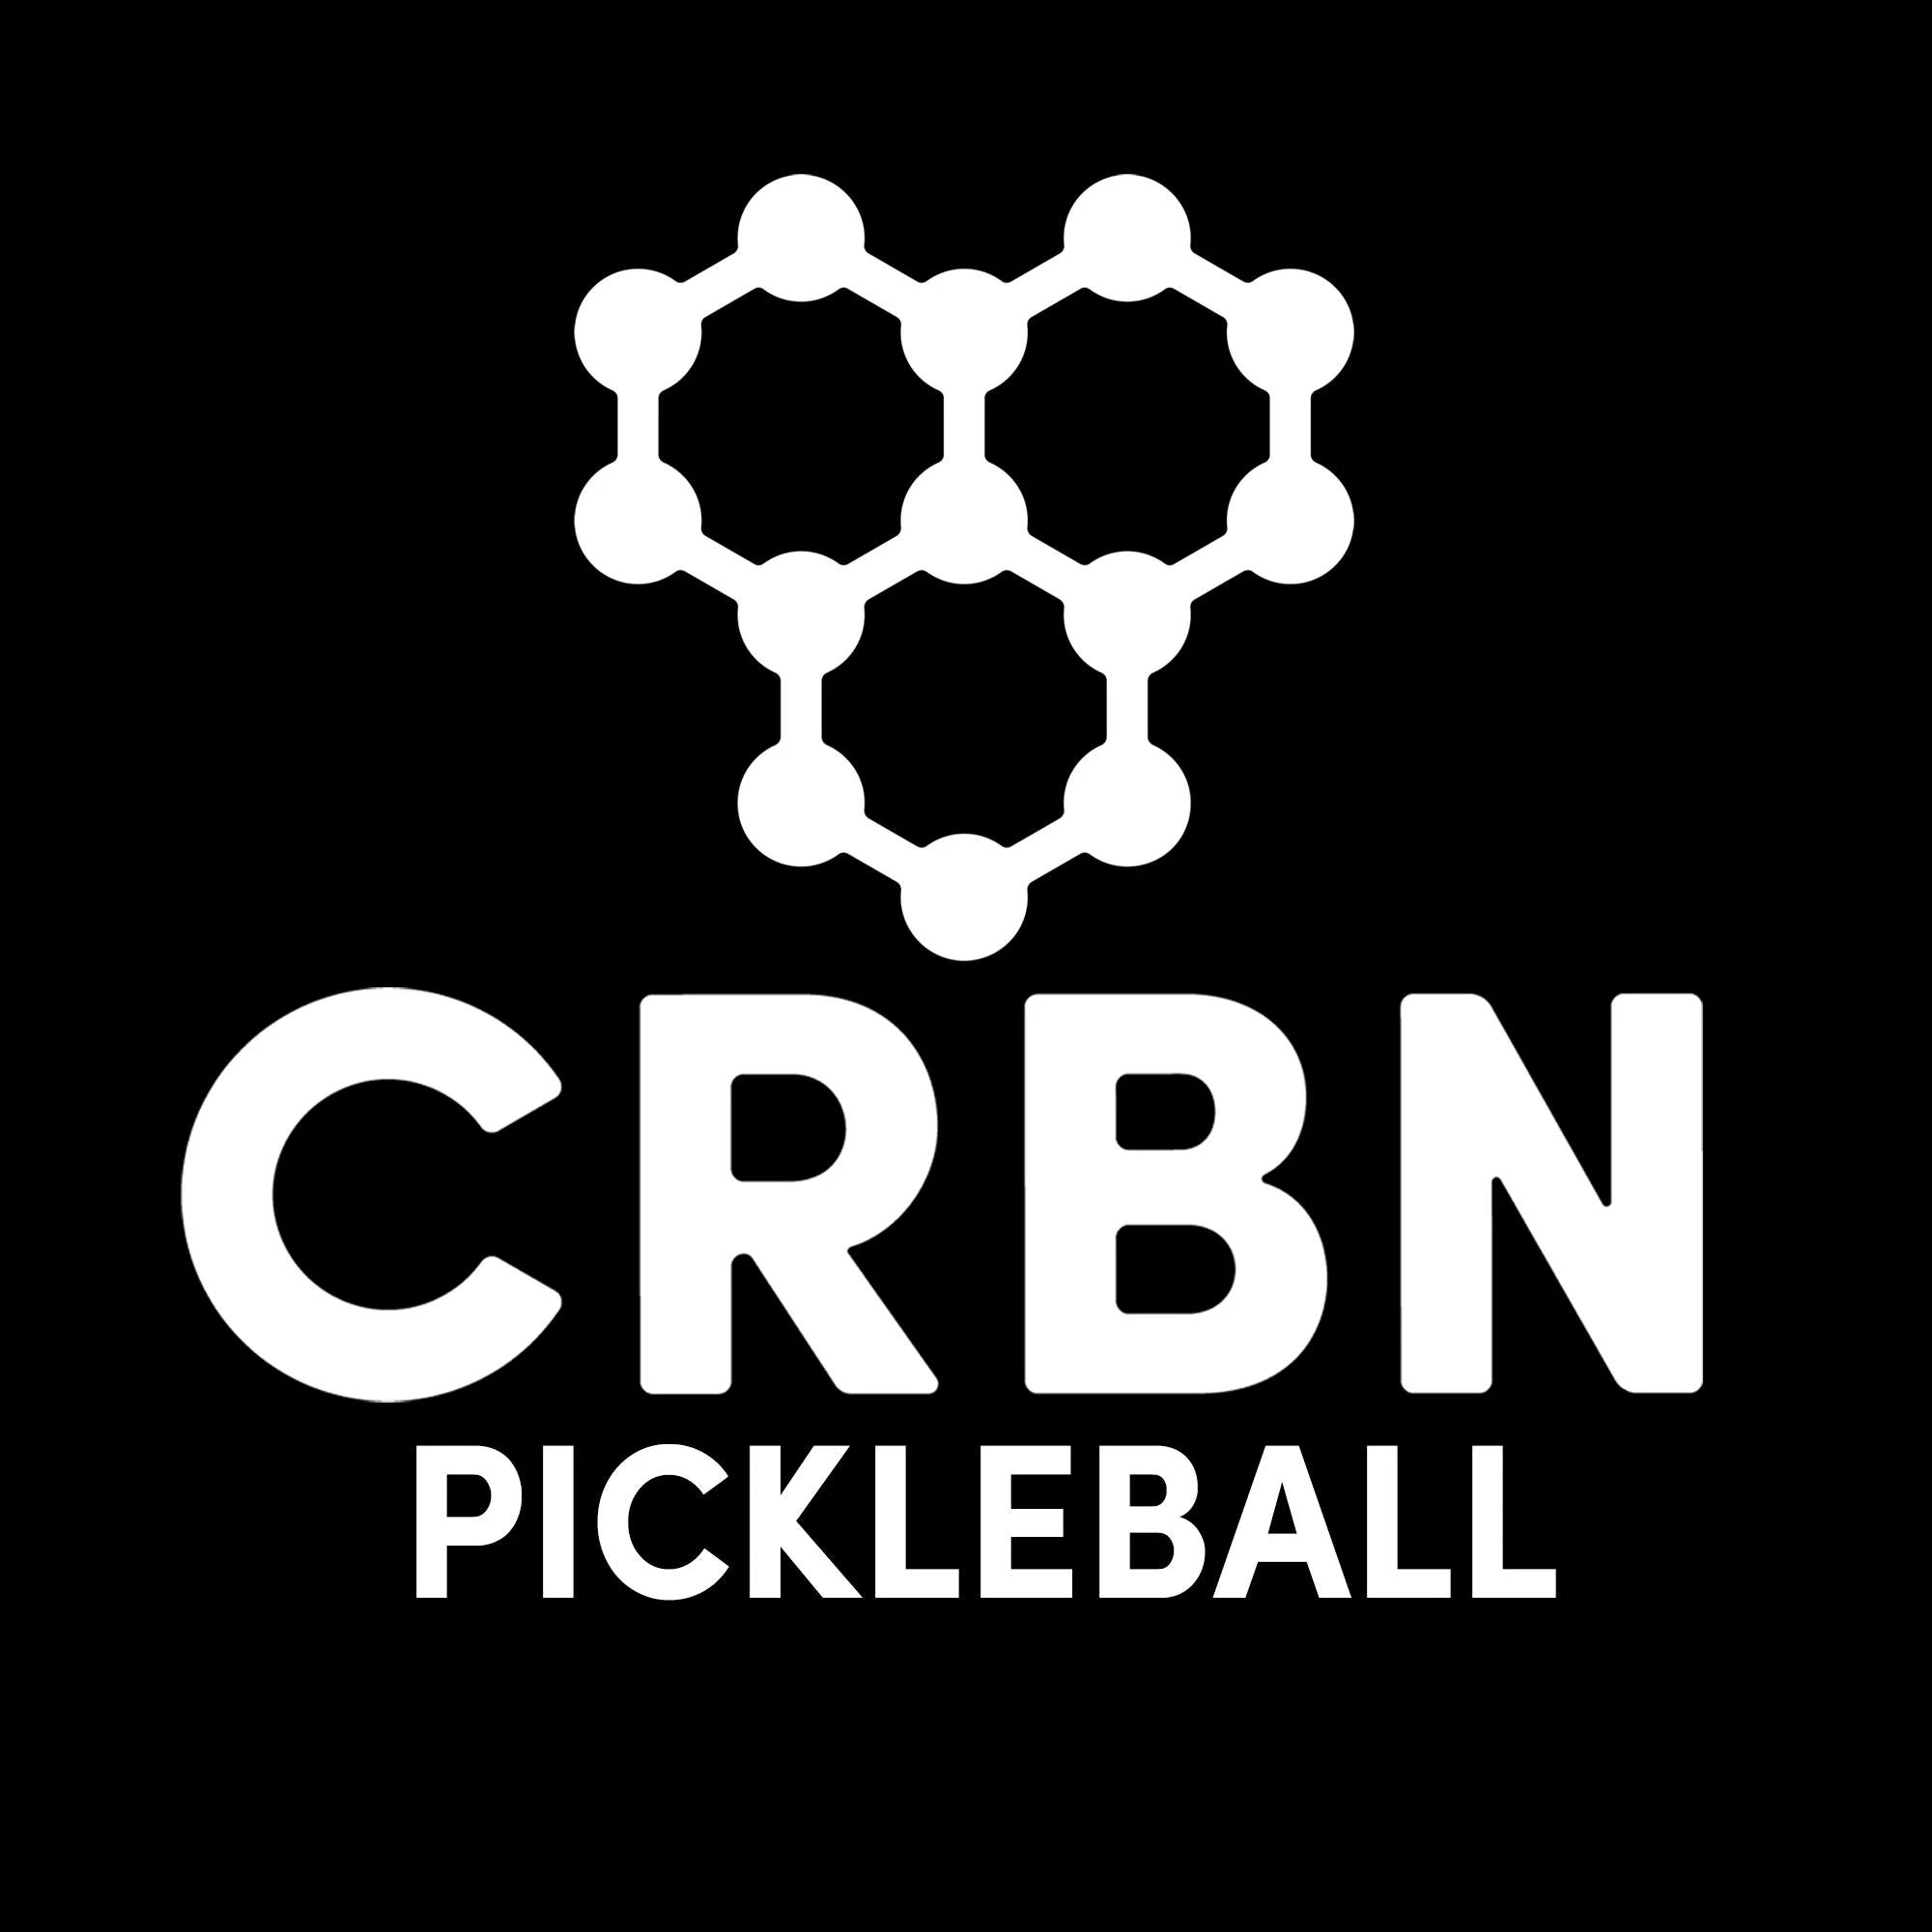 CRBN Pickleball - Pickleball Paddle Shop